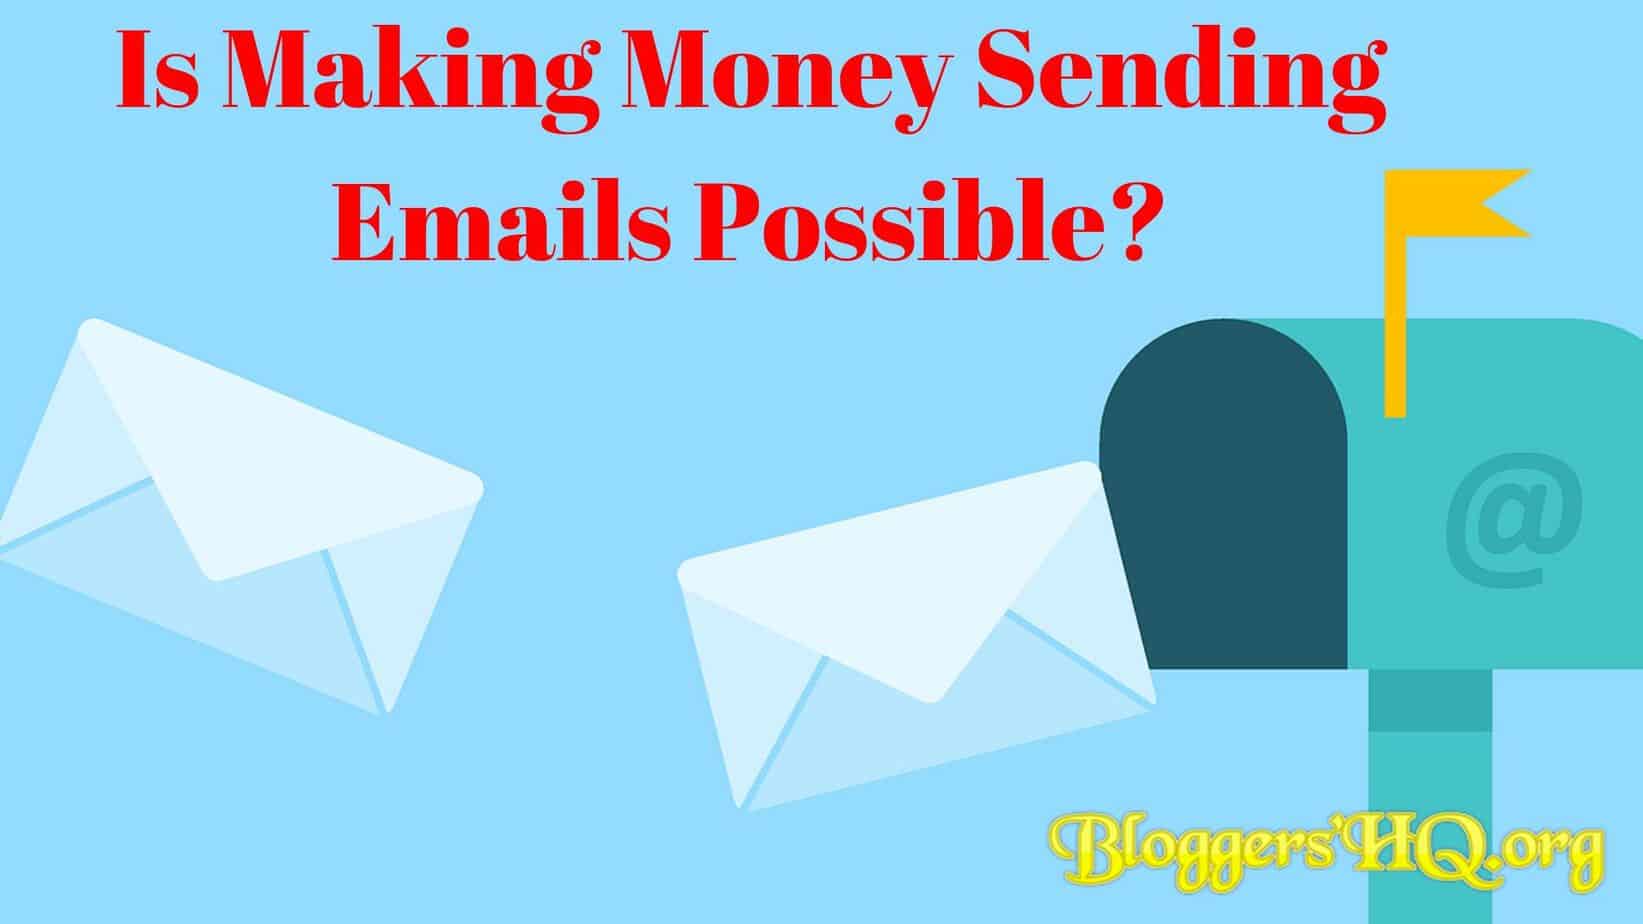 Making Money Sending Emails